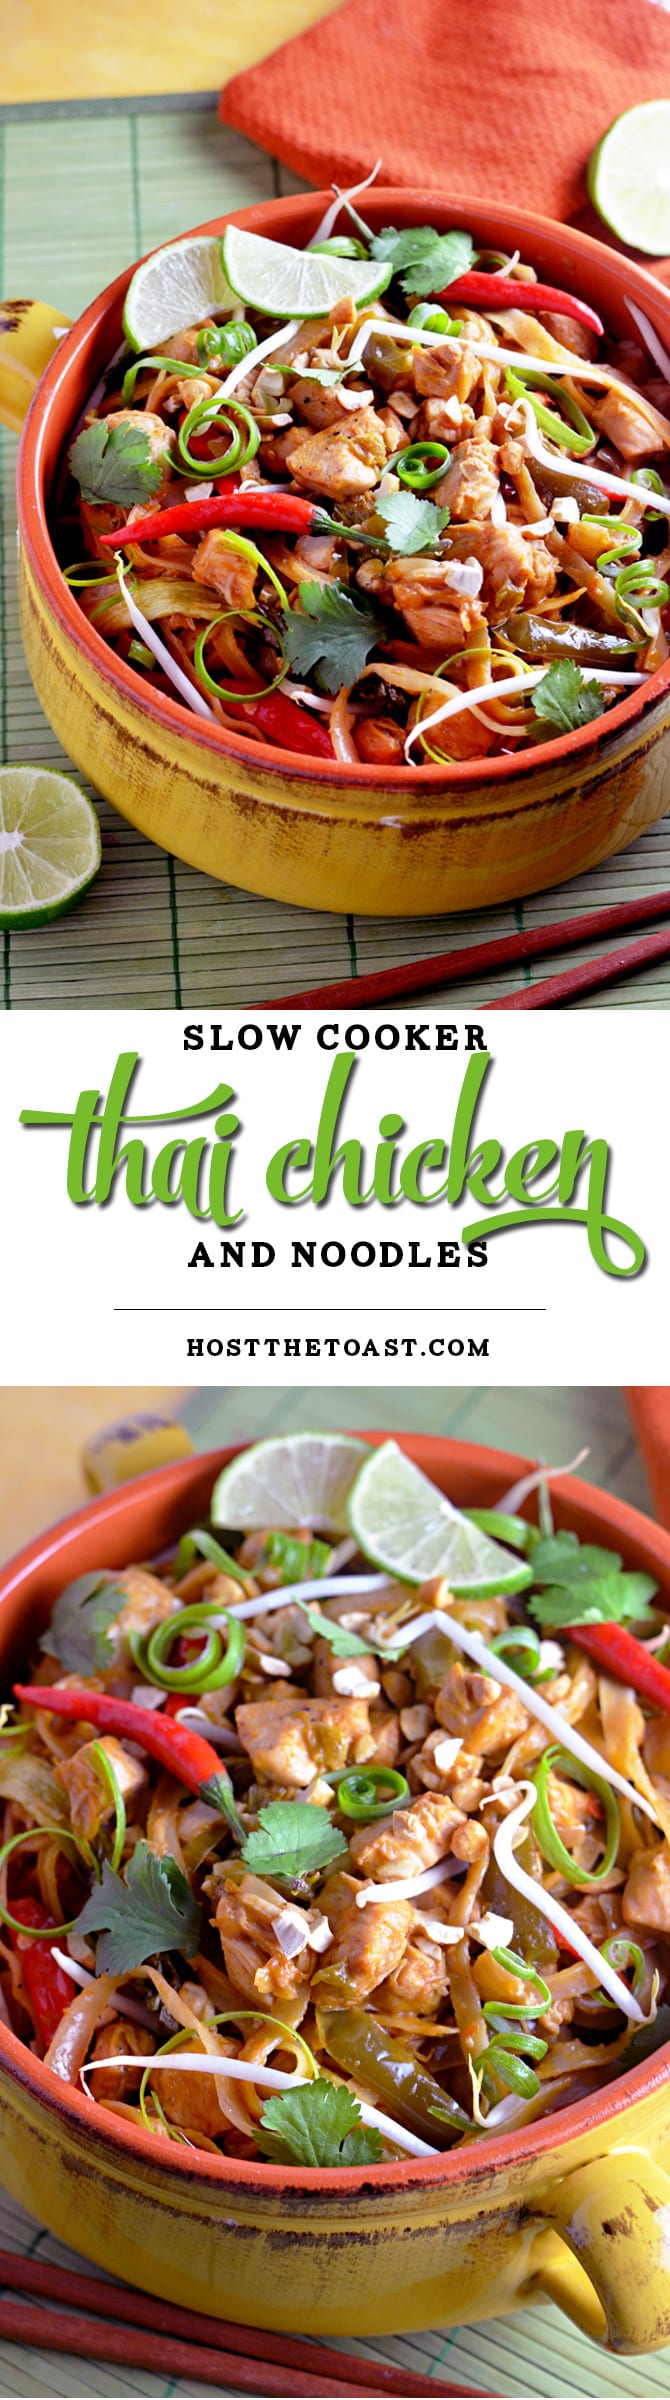 Slow Cooker Thai Chicken and Noodles. The chicken and noodles cook right in the sauce in this flavorful crock pot dish! | hostthetoast.com